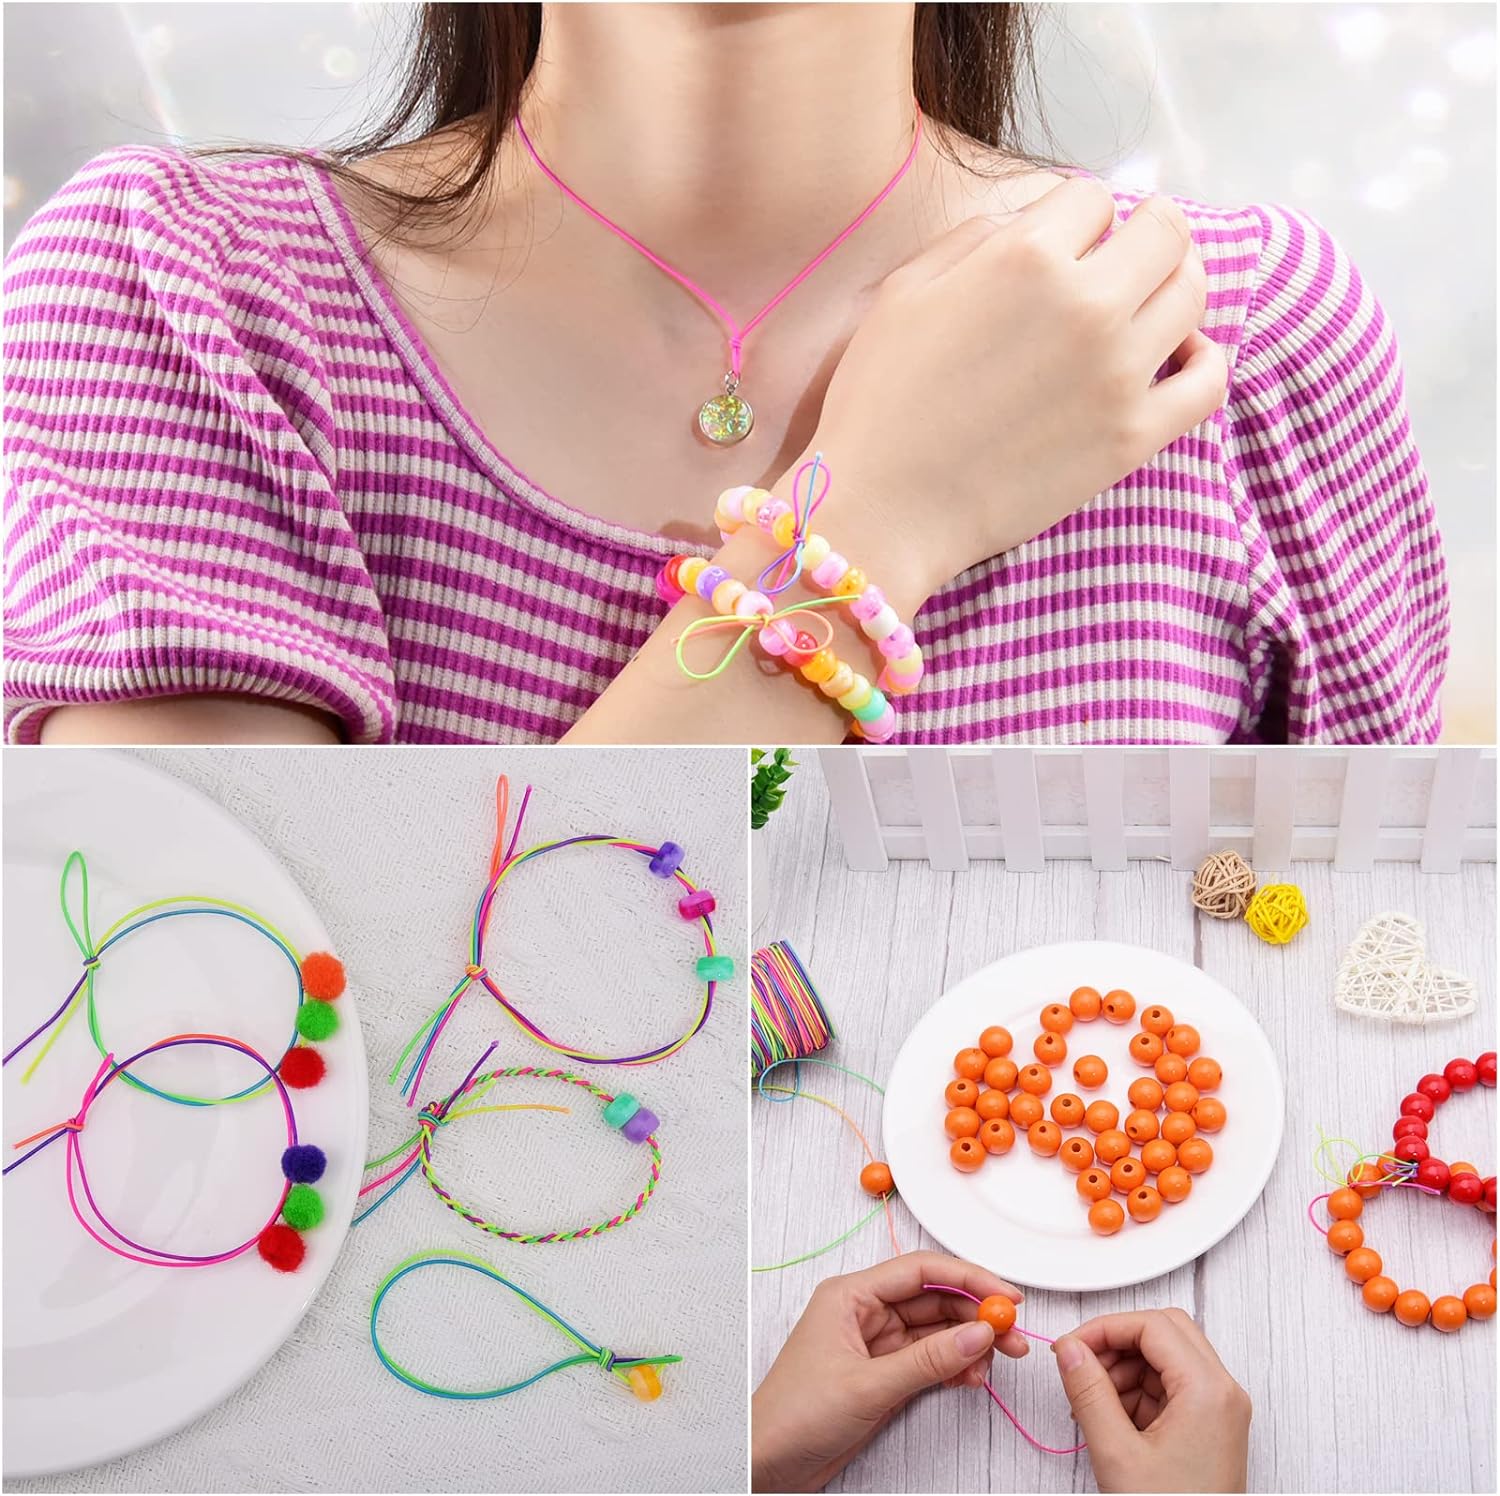 Stretchy Bracelet String, 109 Yards 1mm Rainbow Elastic String for Bracelets, Stretchy String for DIY Crafts, Bracelet Making, Necklaces, Beads